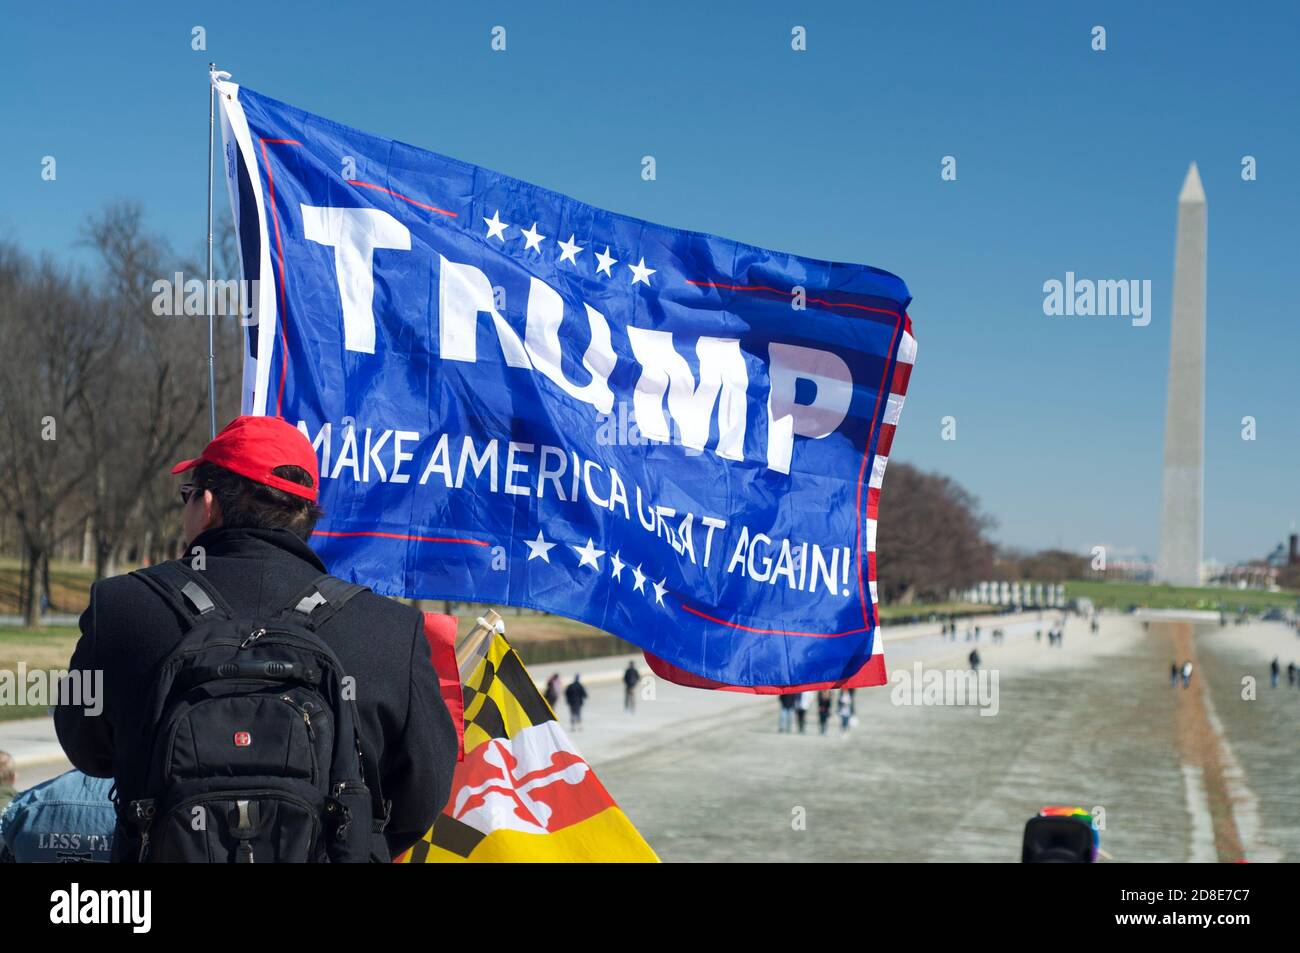 Make America Great Again Kampagne in Washington DC in der Nähe des Lincoln Memorial im Jahr 2018 Stockfoto